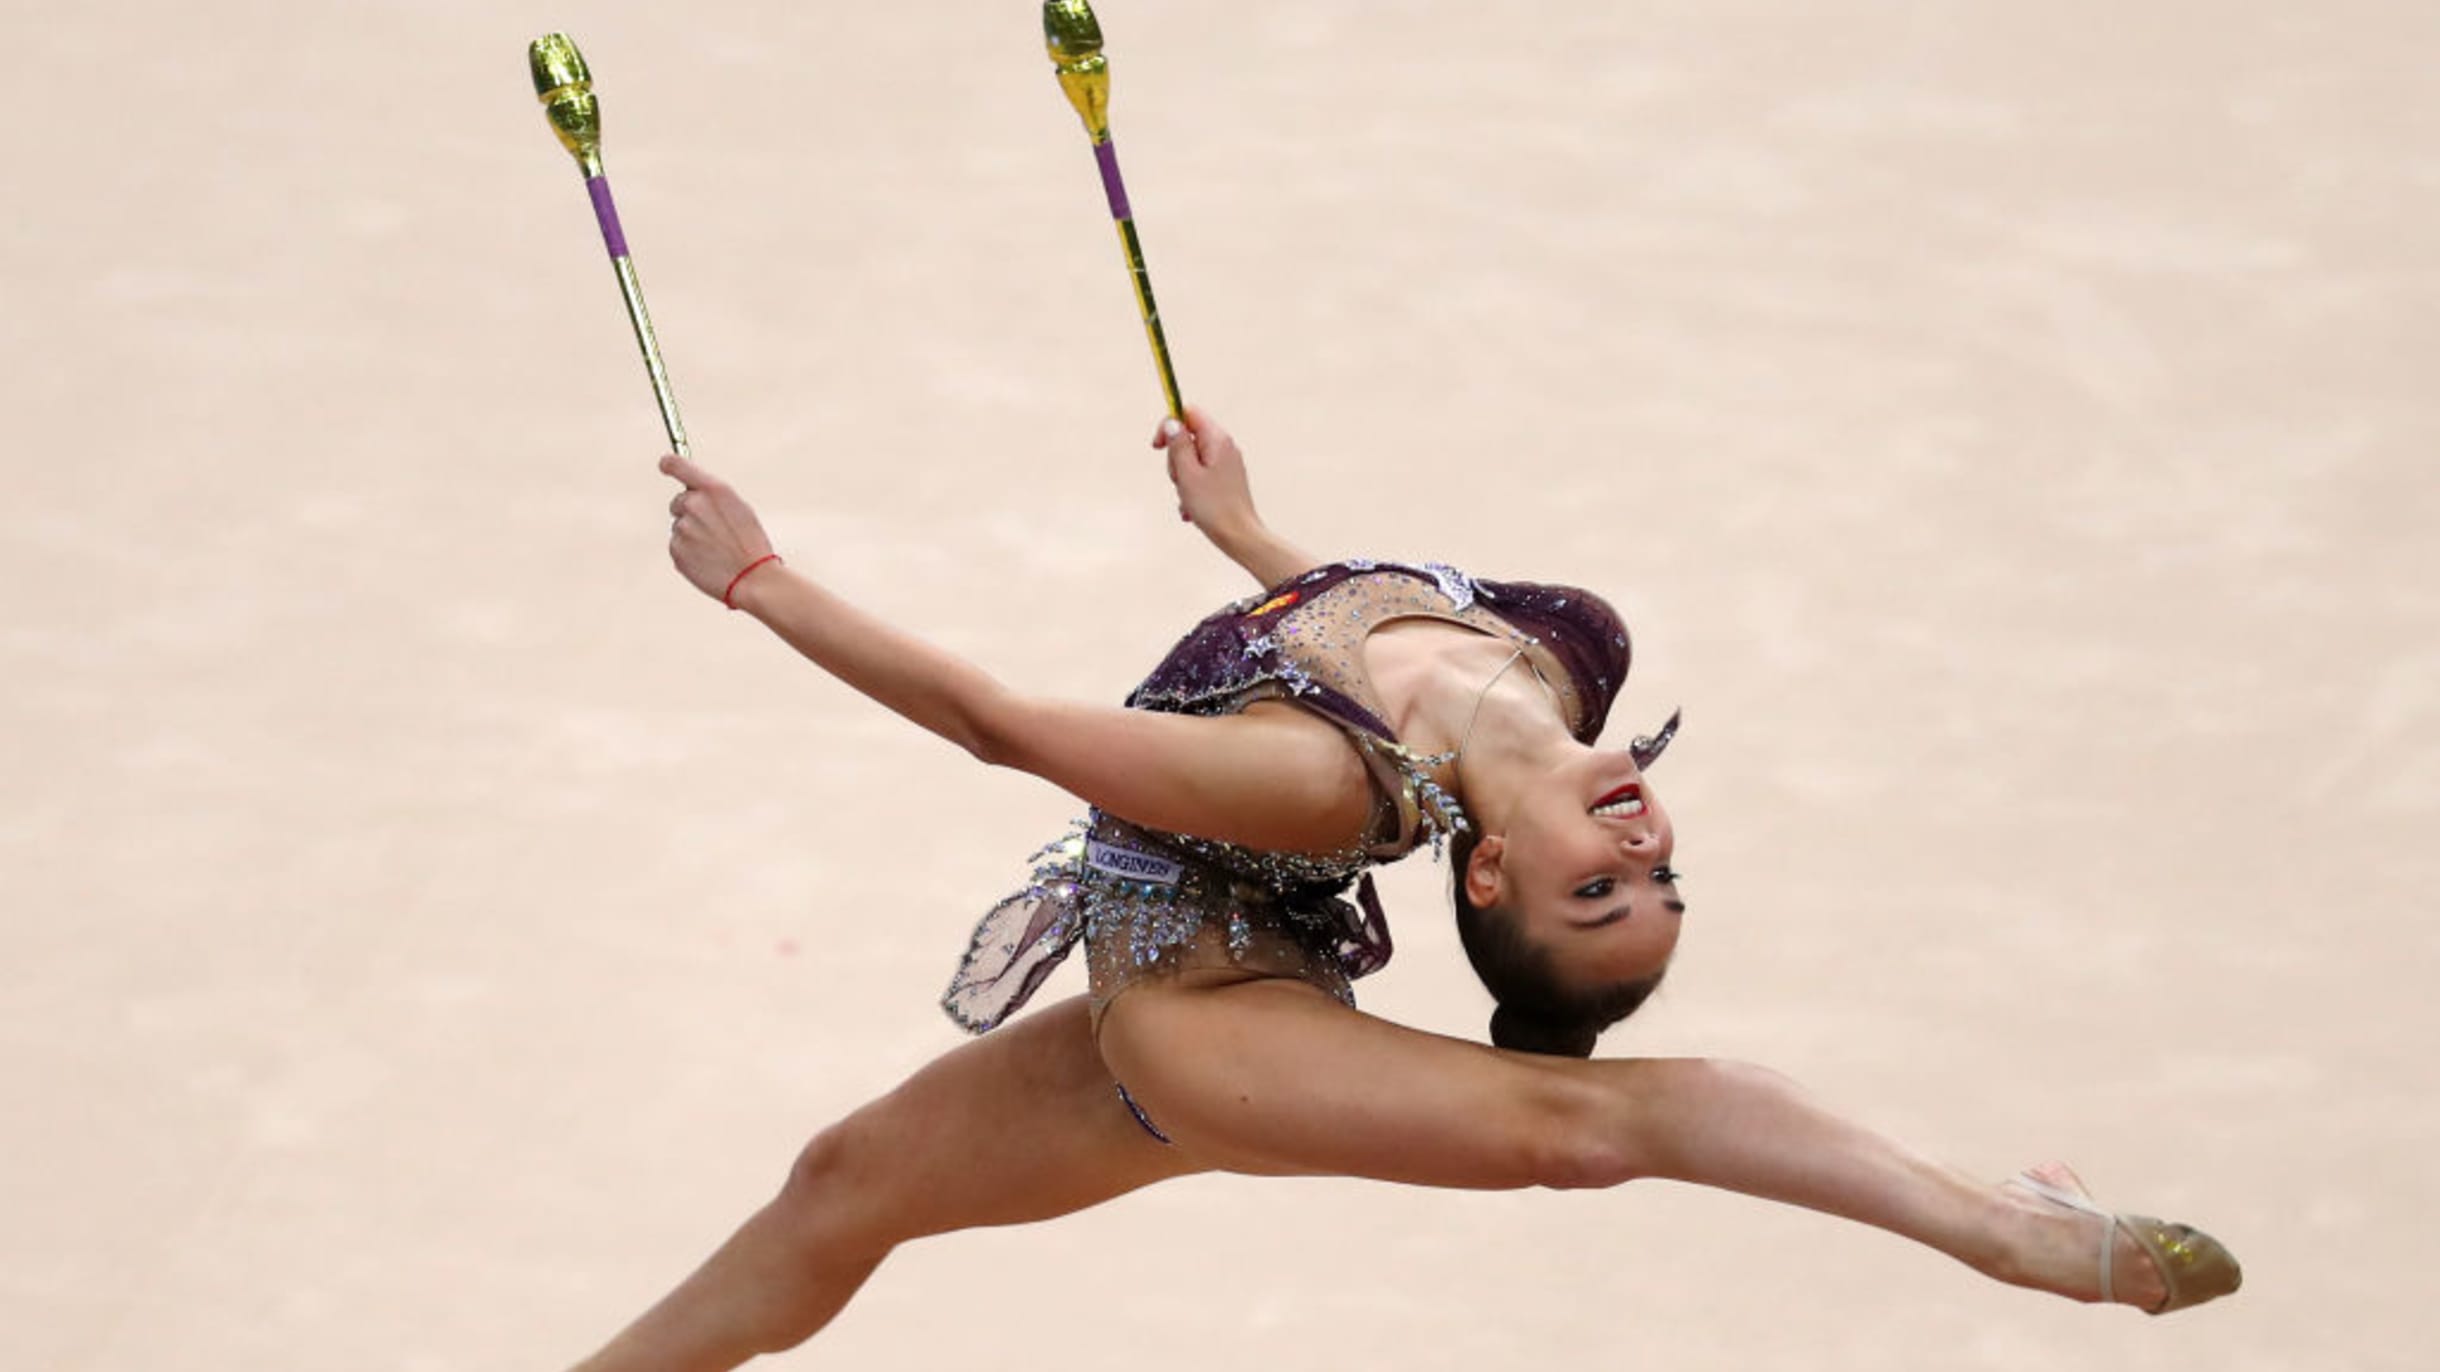 Olympics-Rhythmic Gymnastics-Russian Averina twins qualify on top ahead of  finals